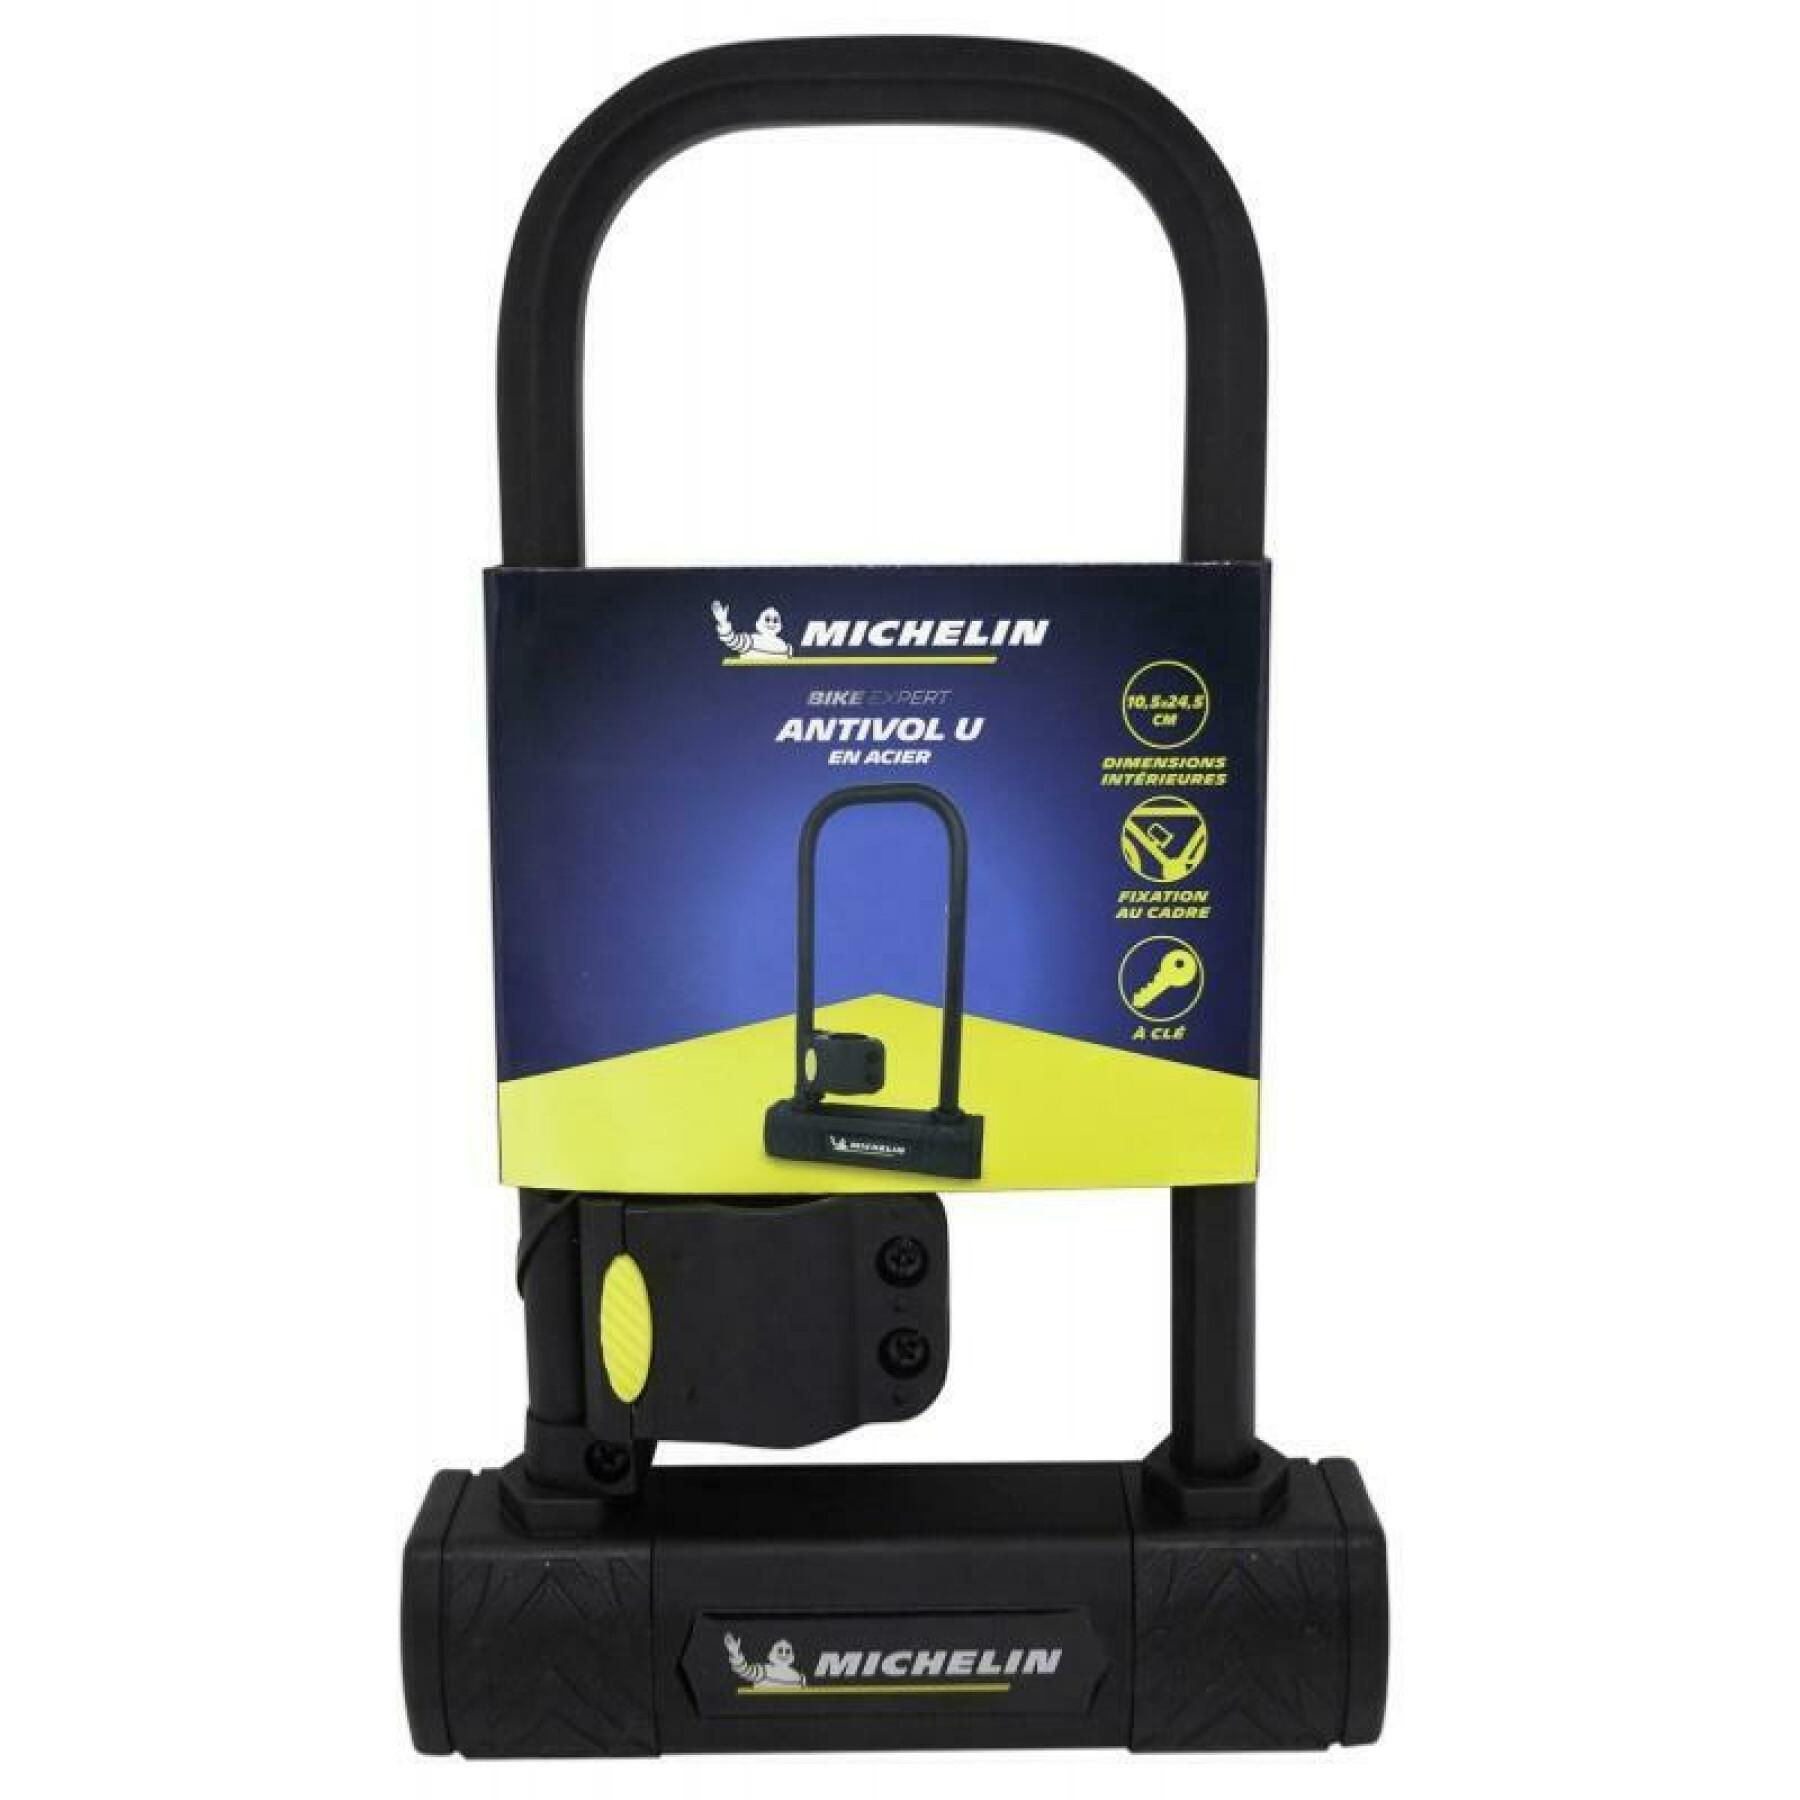 High security anti-theft device Michelin U 245